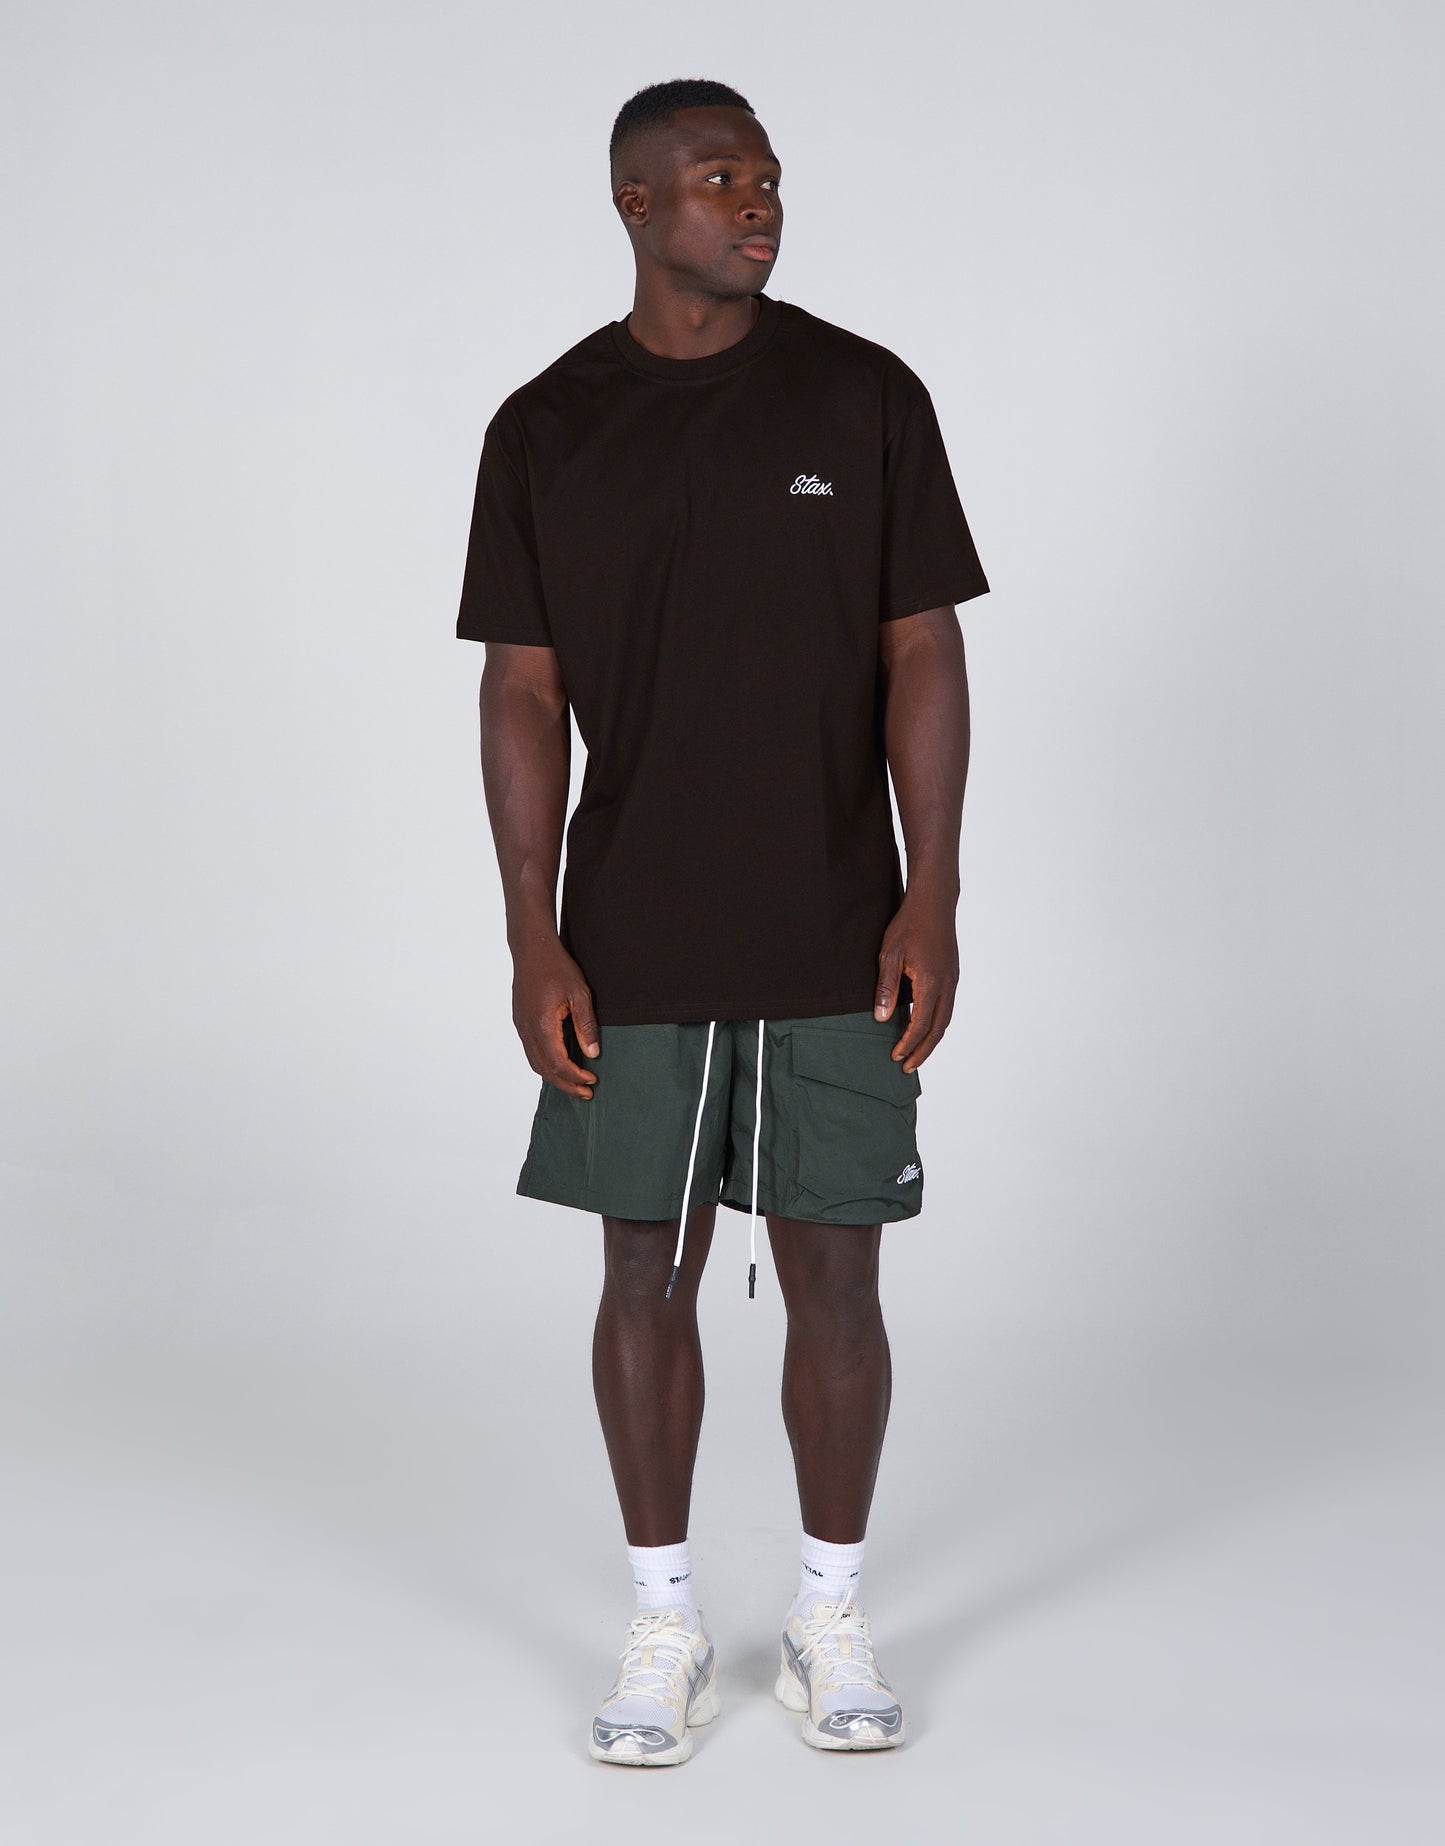 Mens Cursive Nylon Shorts - Creo (Green)